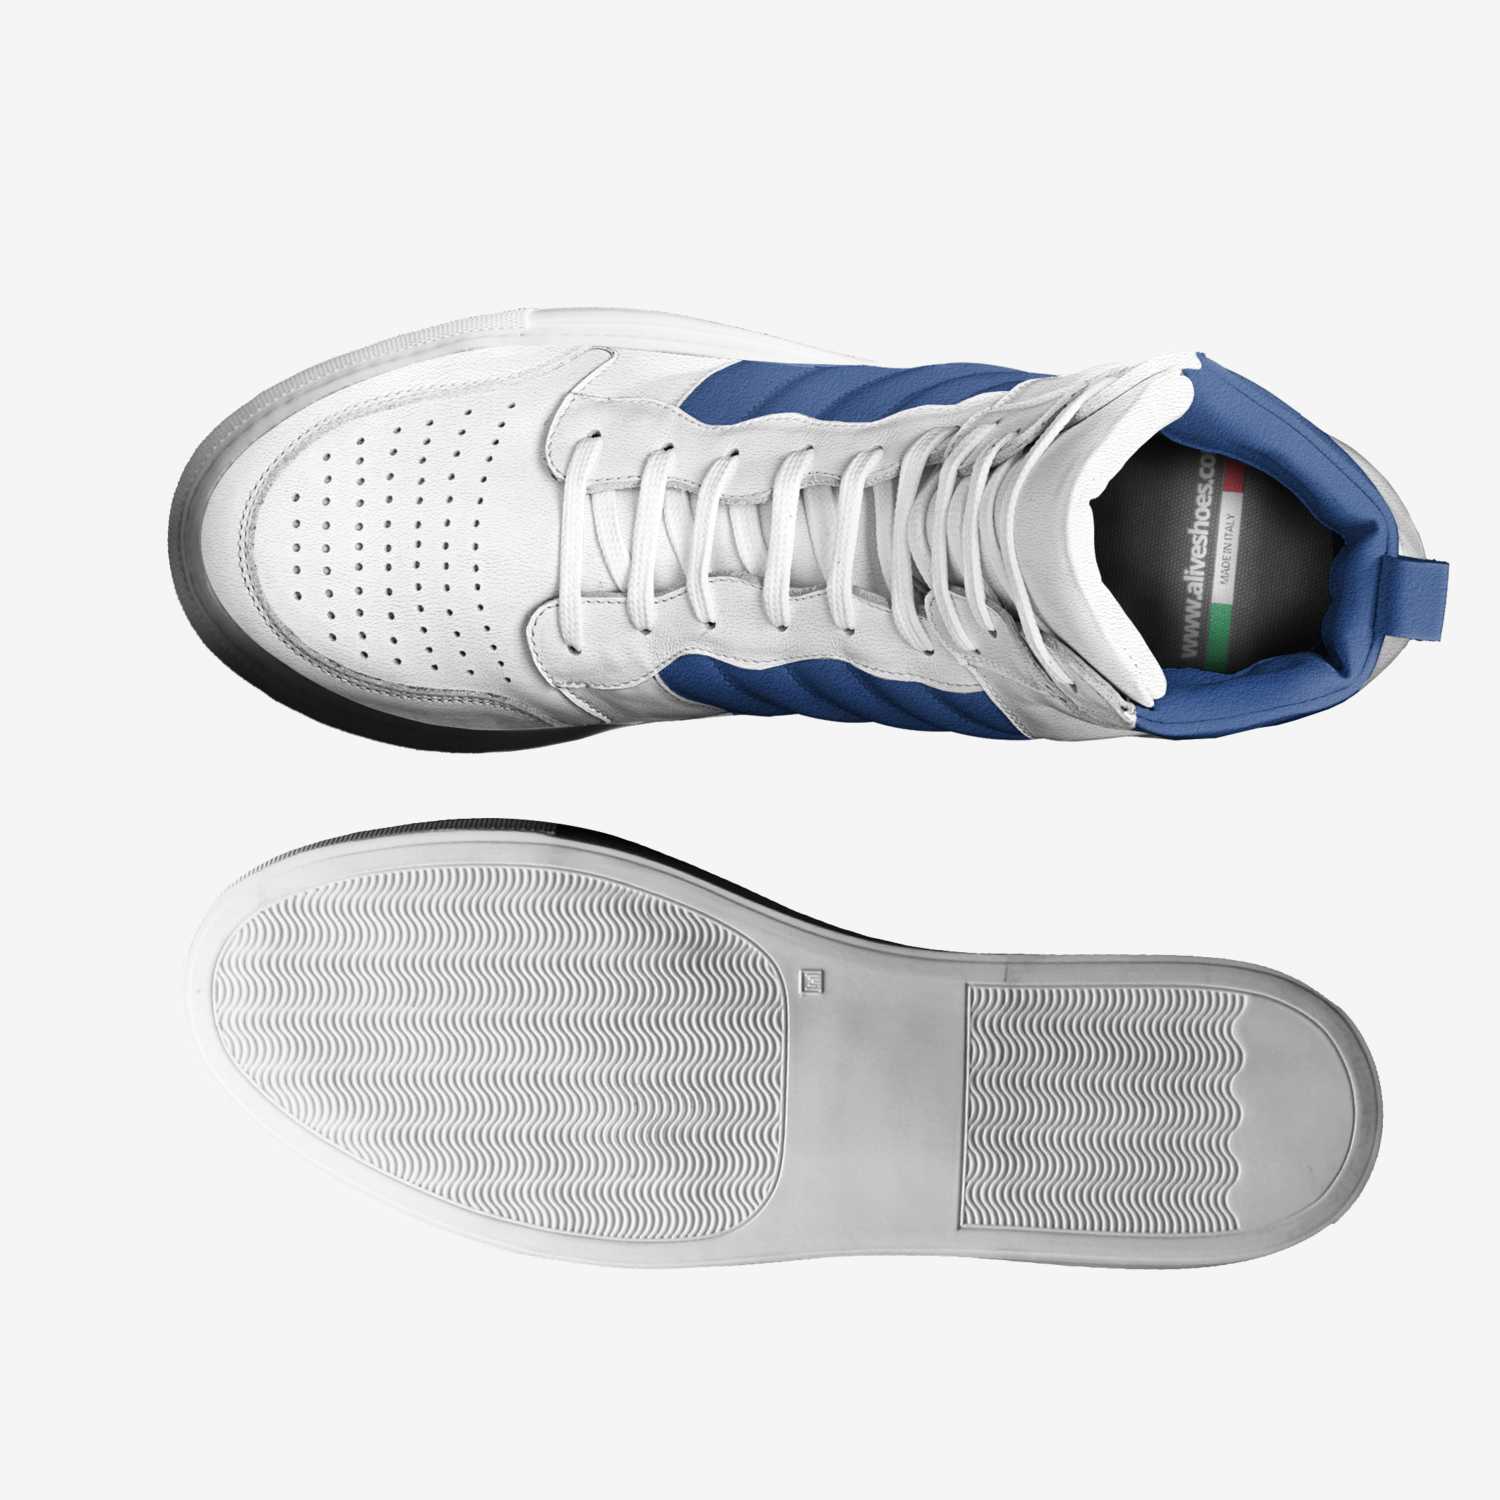 Logan paul | A Custom Shoe concept by Codymichealhodges